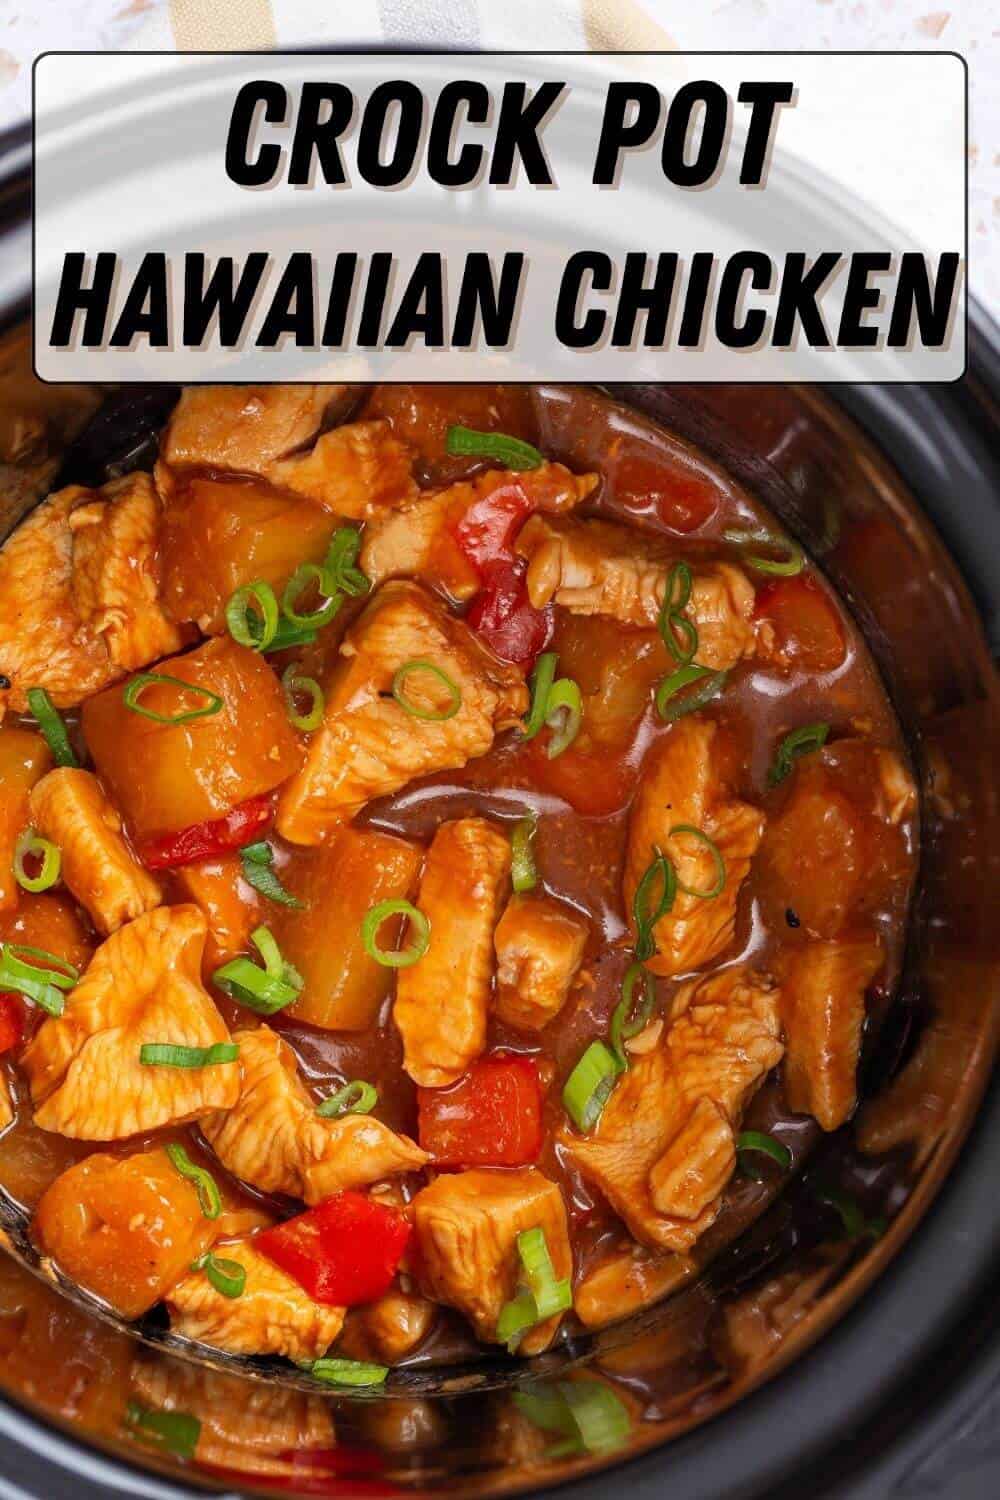 Crock pot hawaiian chicken.